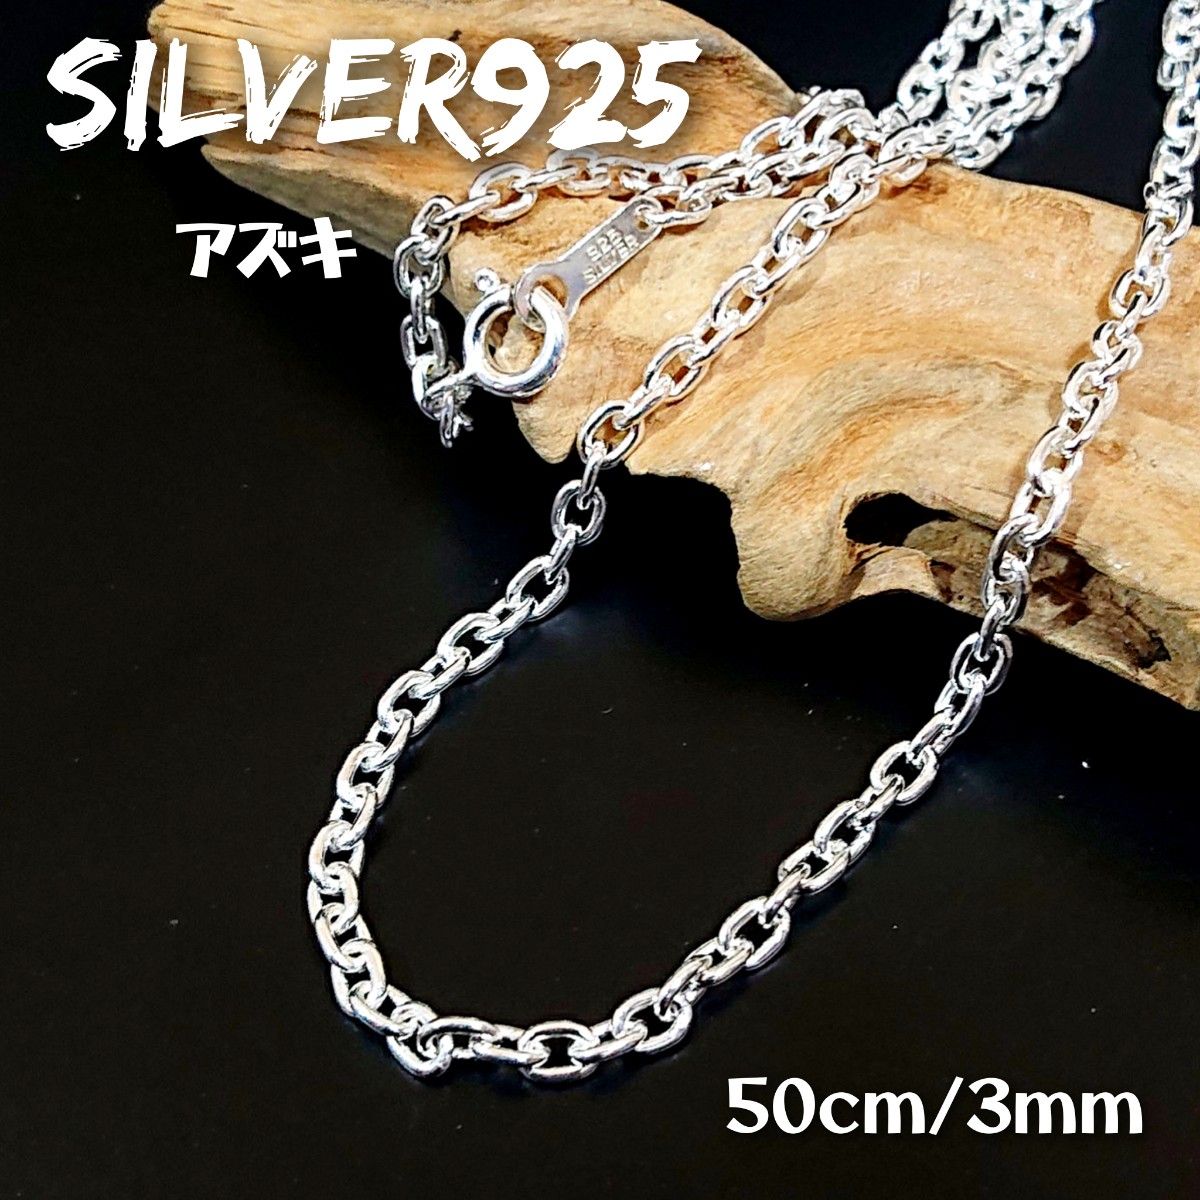 5286 SILVER925 アズキネックレスチェーン50cm/3mm 細 シルバー925 シンプル売れ筋 19-50 楕円あずき